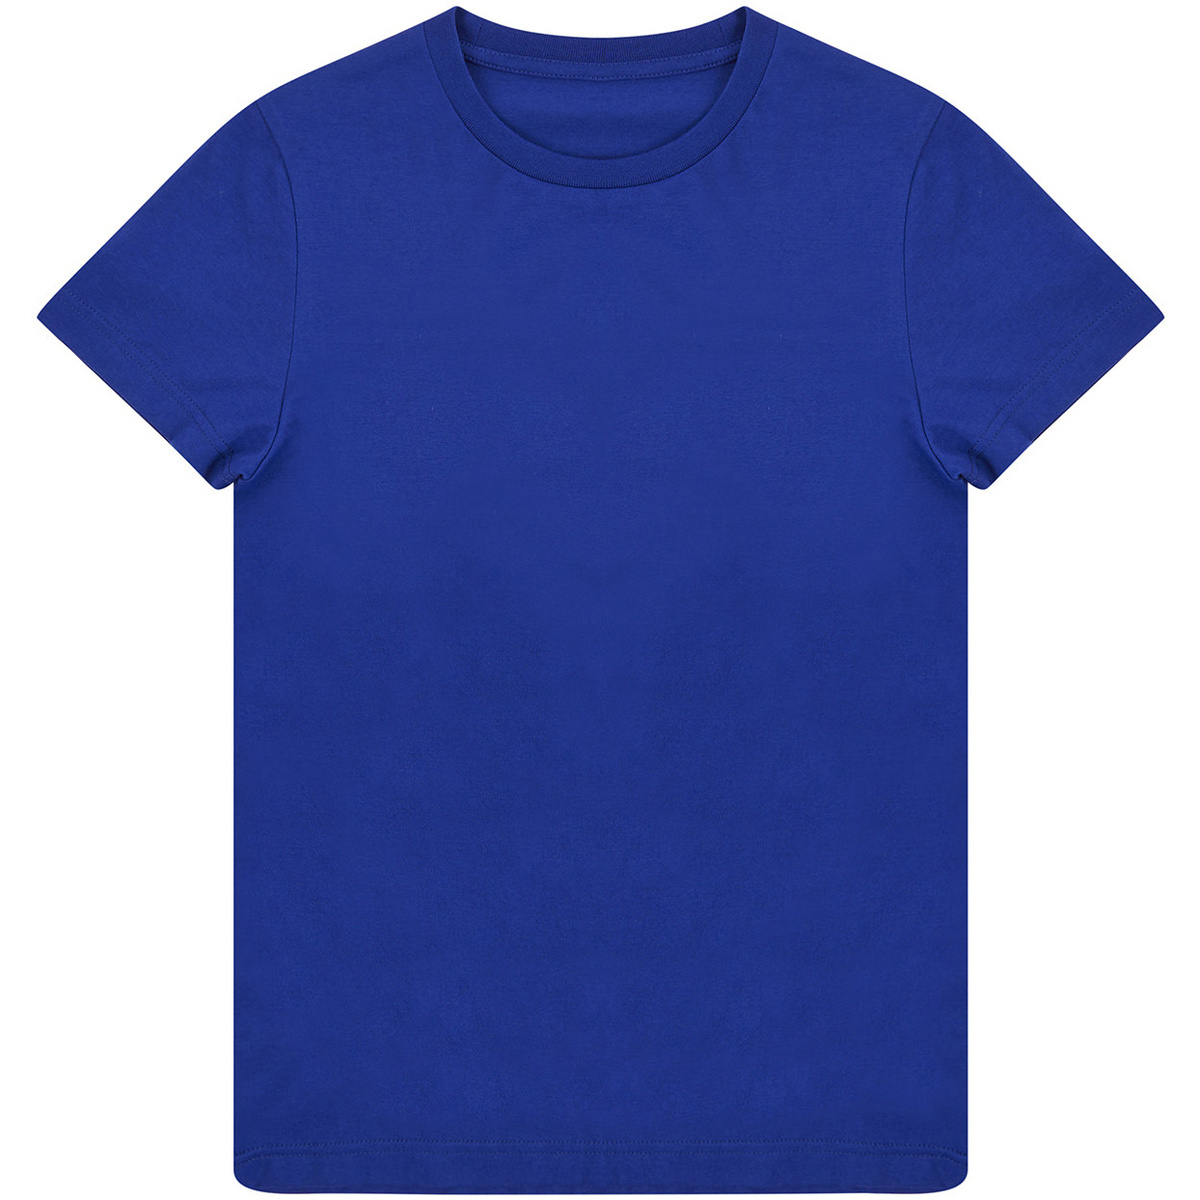 Vêtements Låt din sportiga sida lysa i denna smala t-shirt Generation Bleu